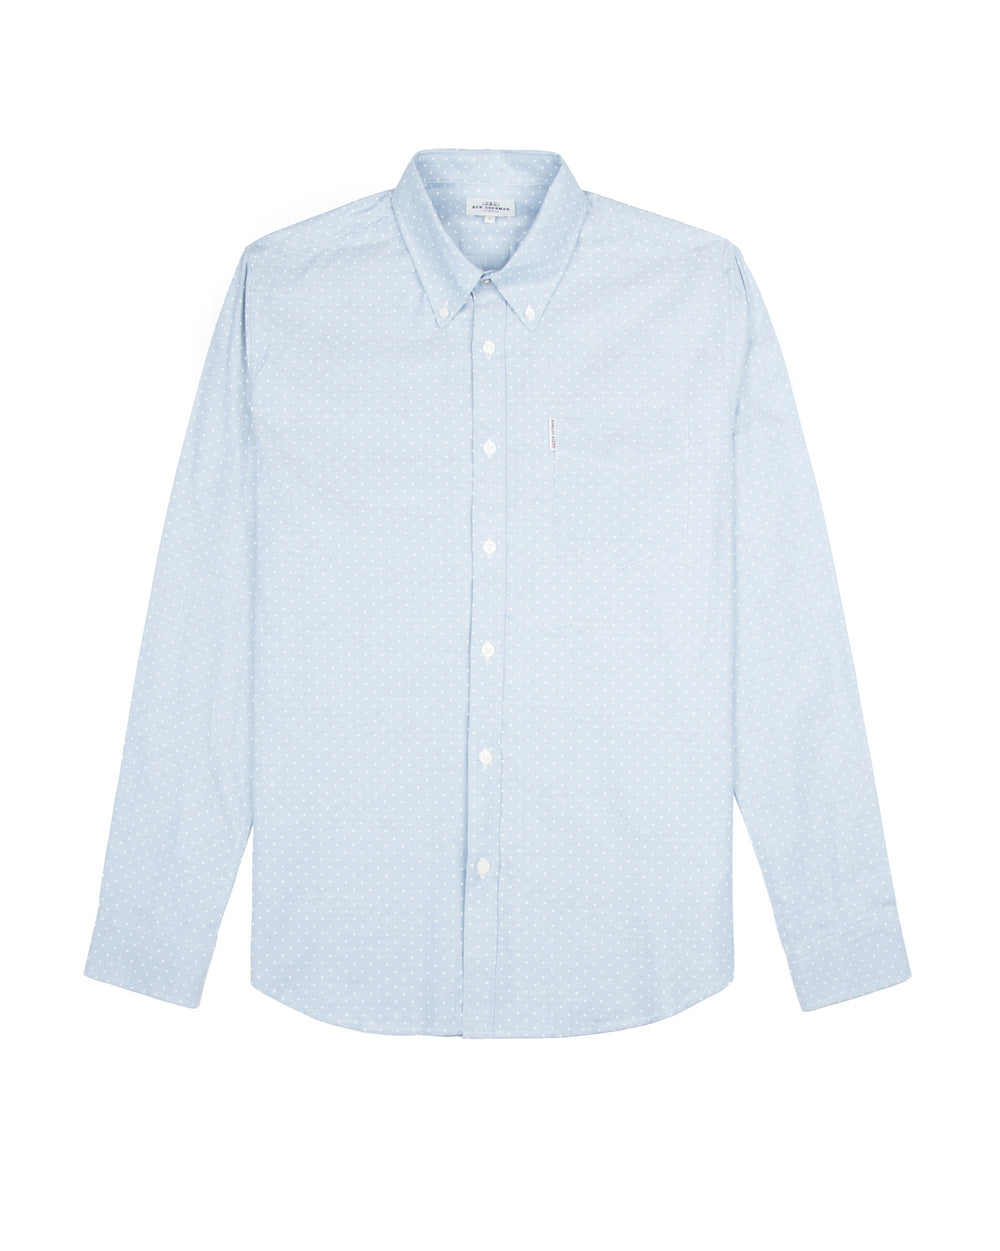 Long-Sleeve Polka Dot Oxford Shirt - Sky